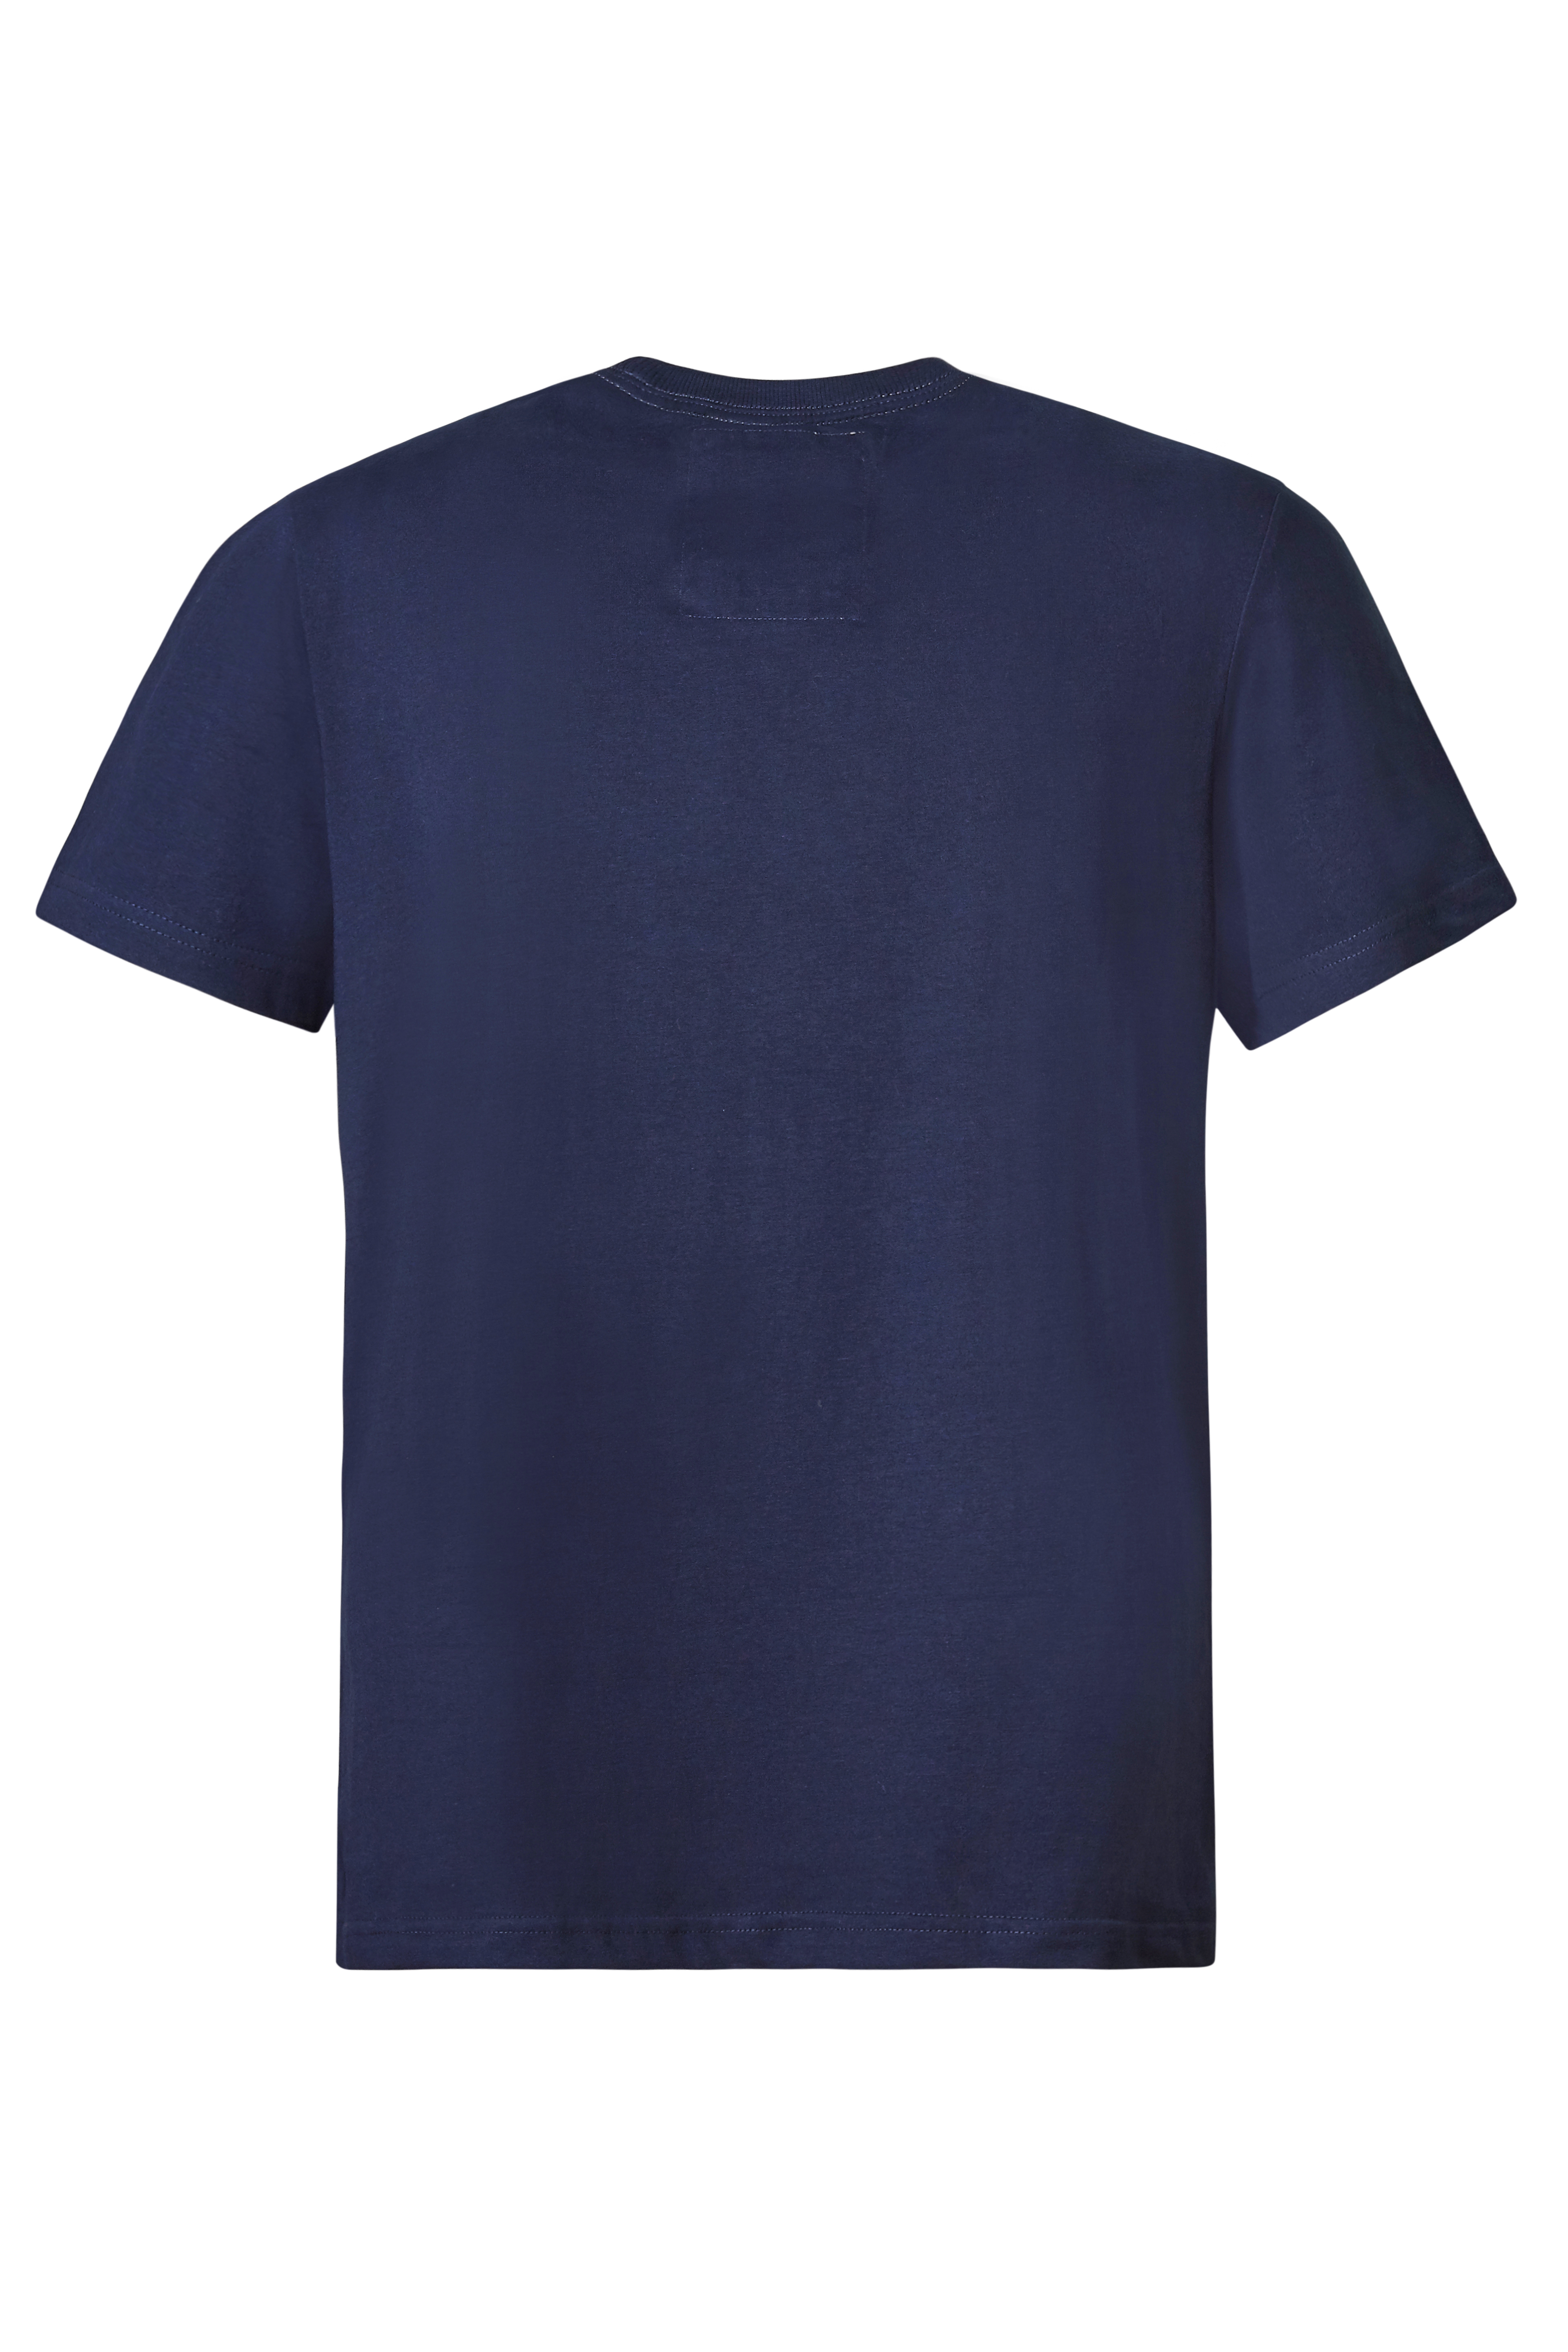 Cordon Sport T Shirt Alex